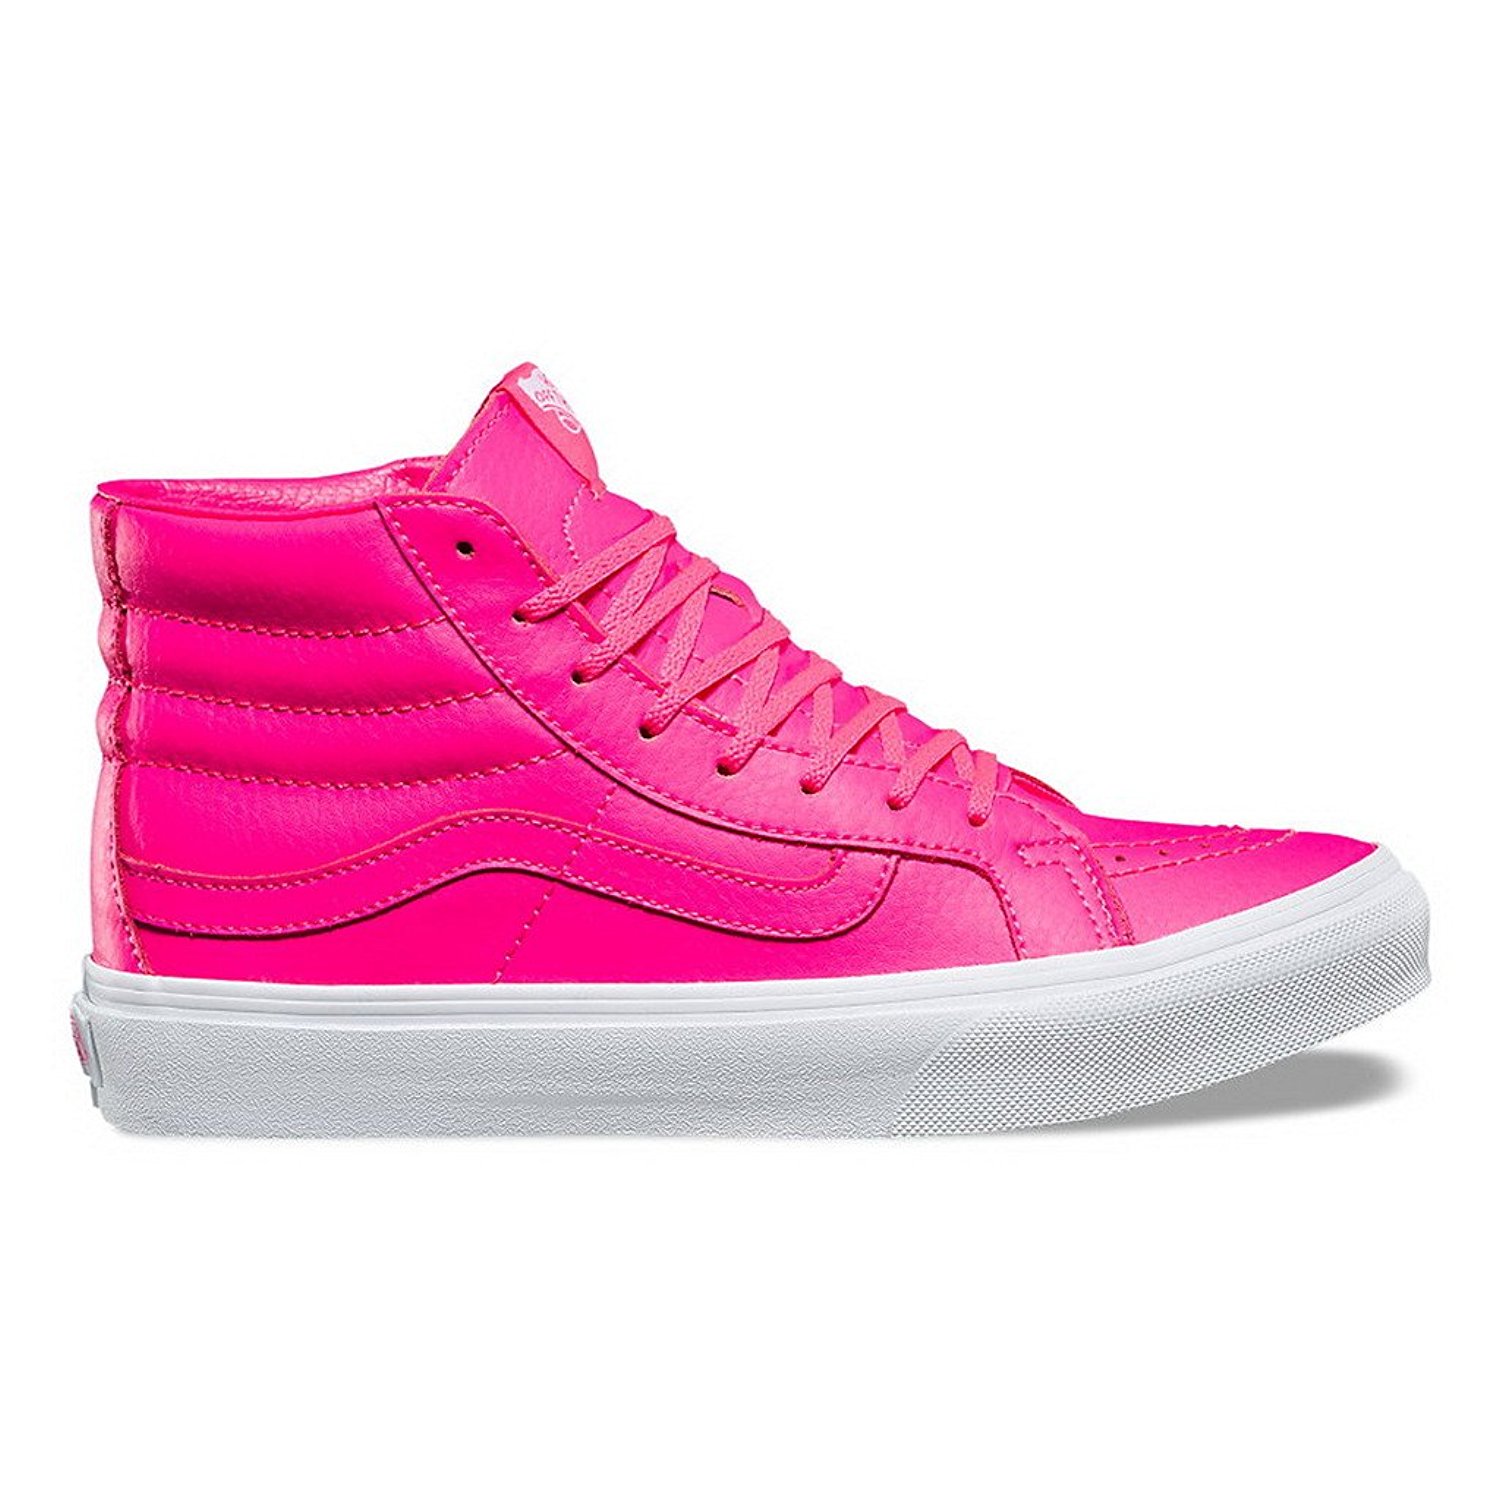 Vans Sk8-Hi Slim Neon Leather Pink High-Top Skateboarding Shoe - 7M / 5.5M - image 2 of 4